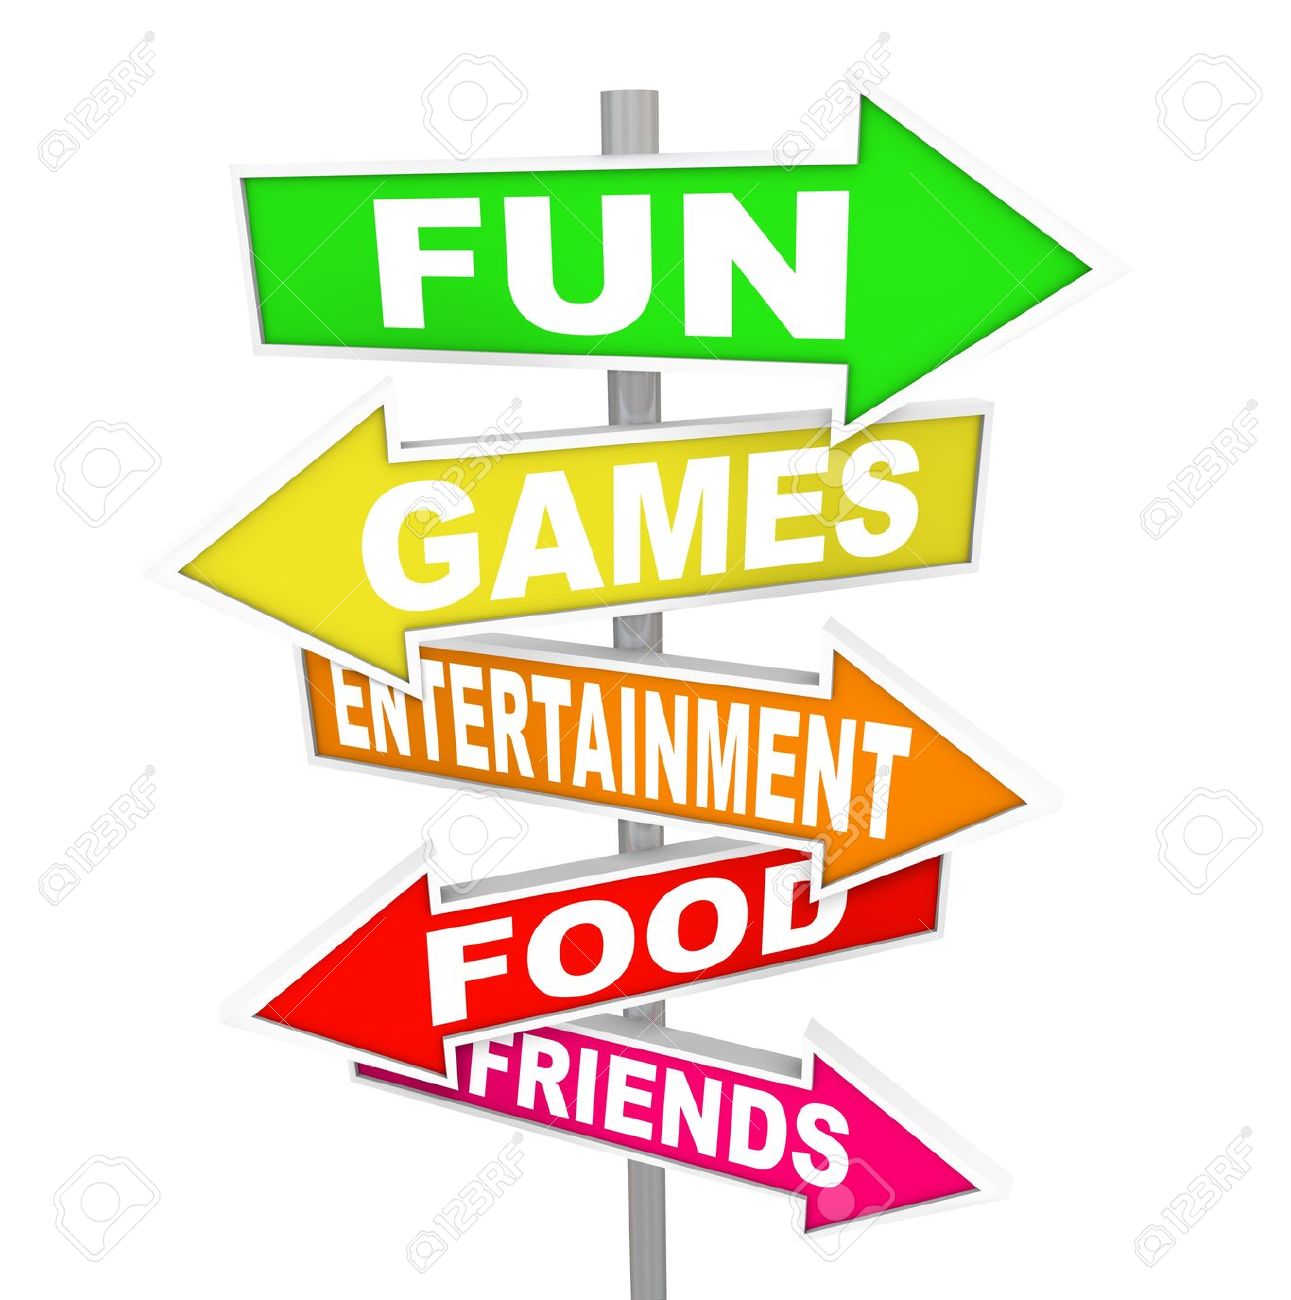 cool and fun free games